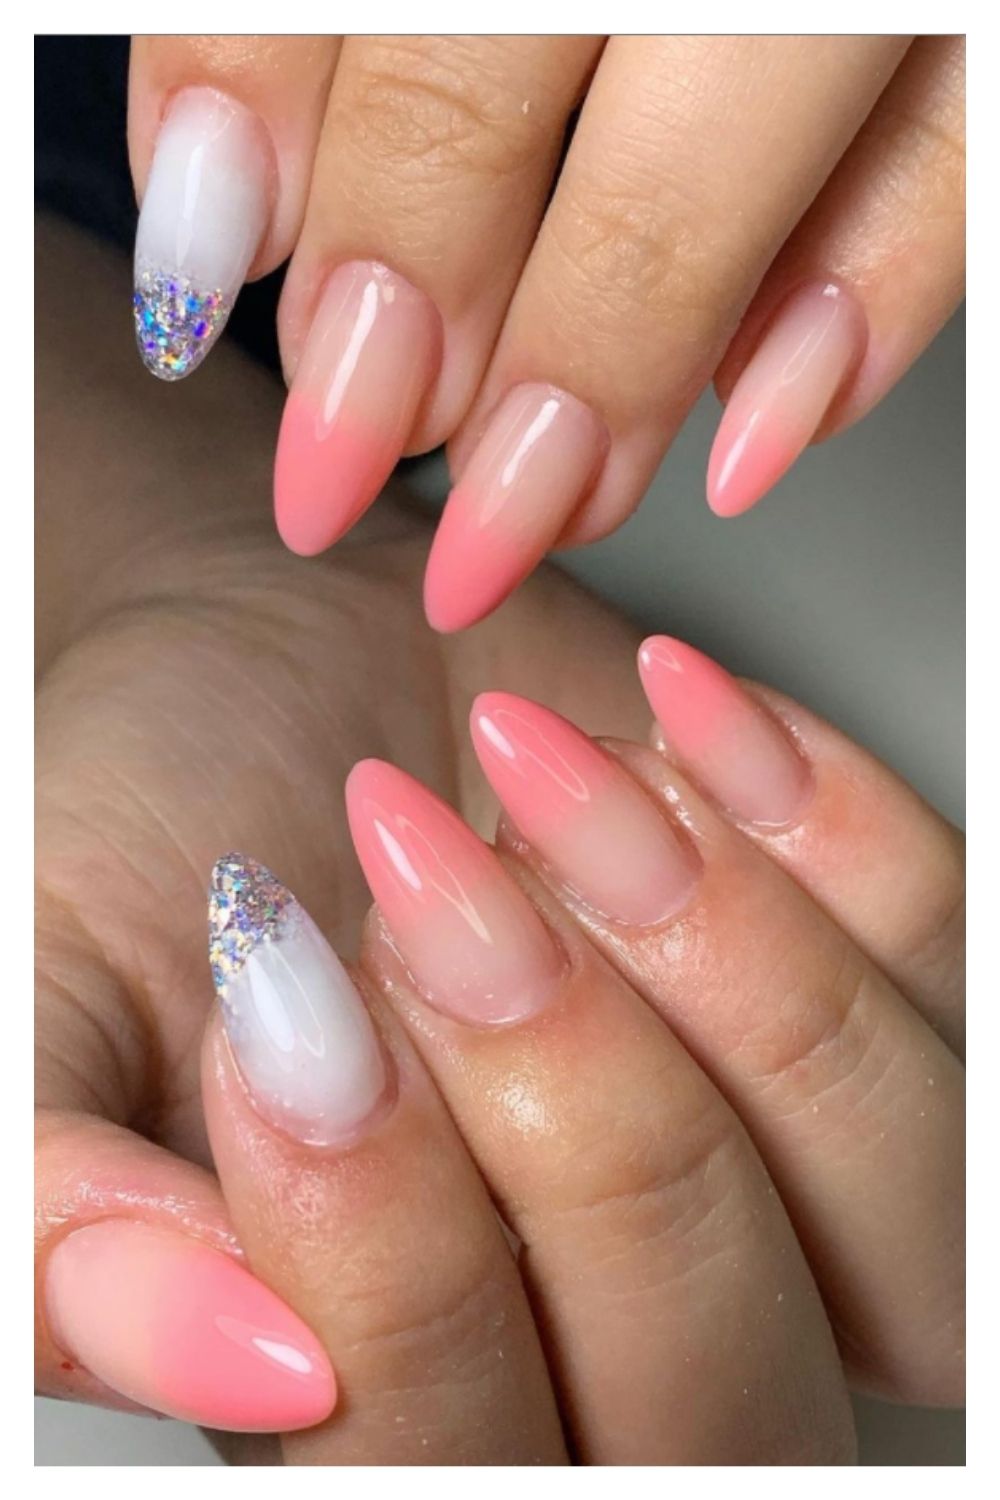 Classy almond nails